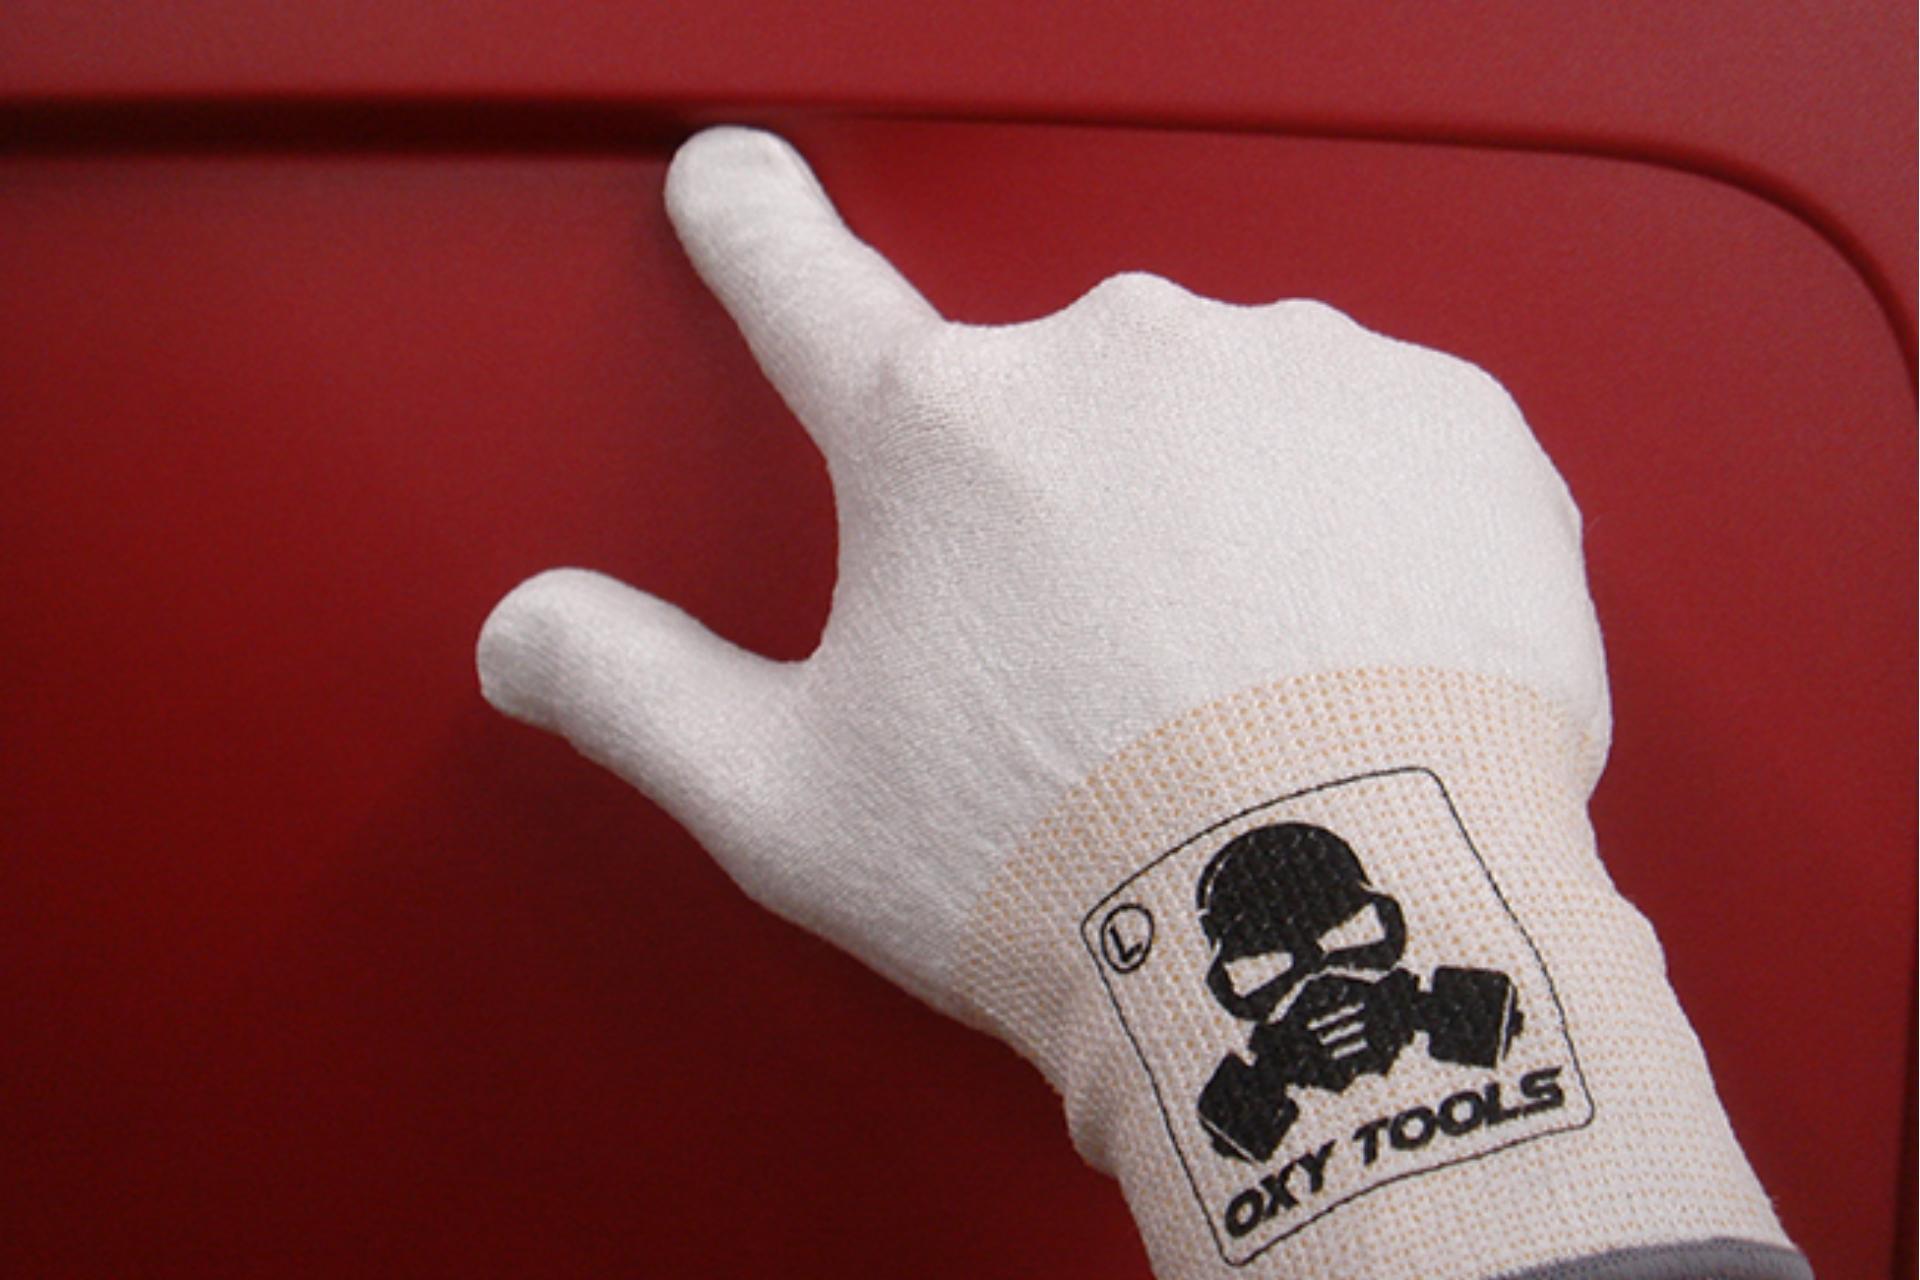 Foto: Oxy Tools Revolution Wrapping Glove - Größe: M